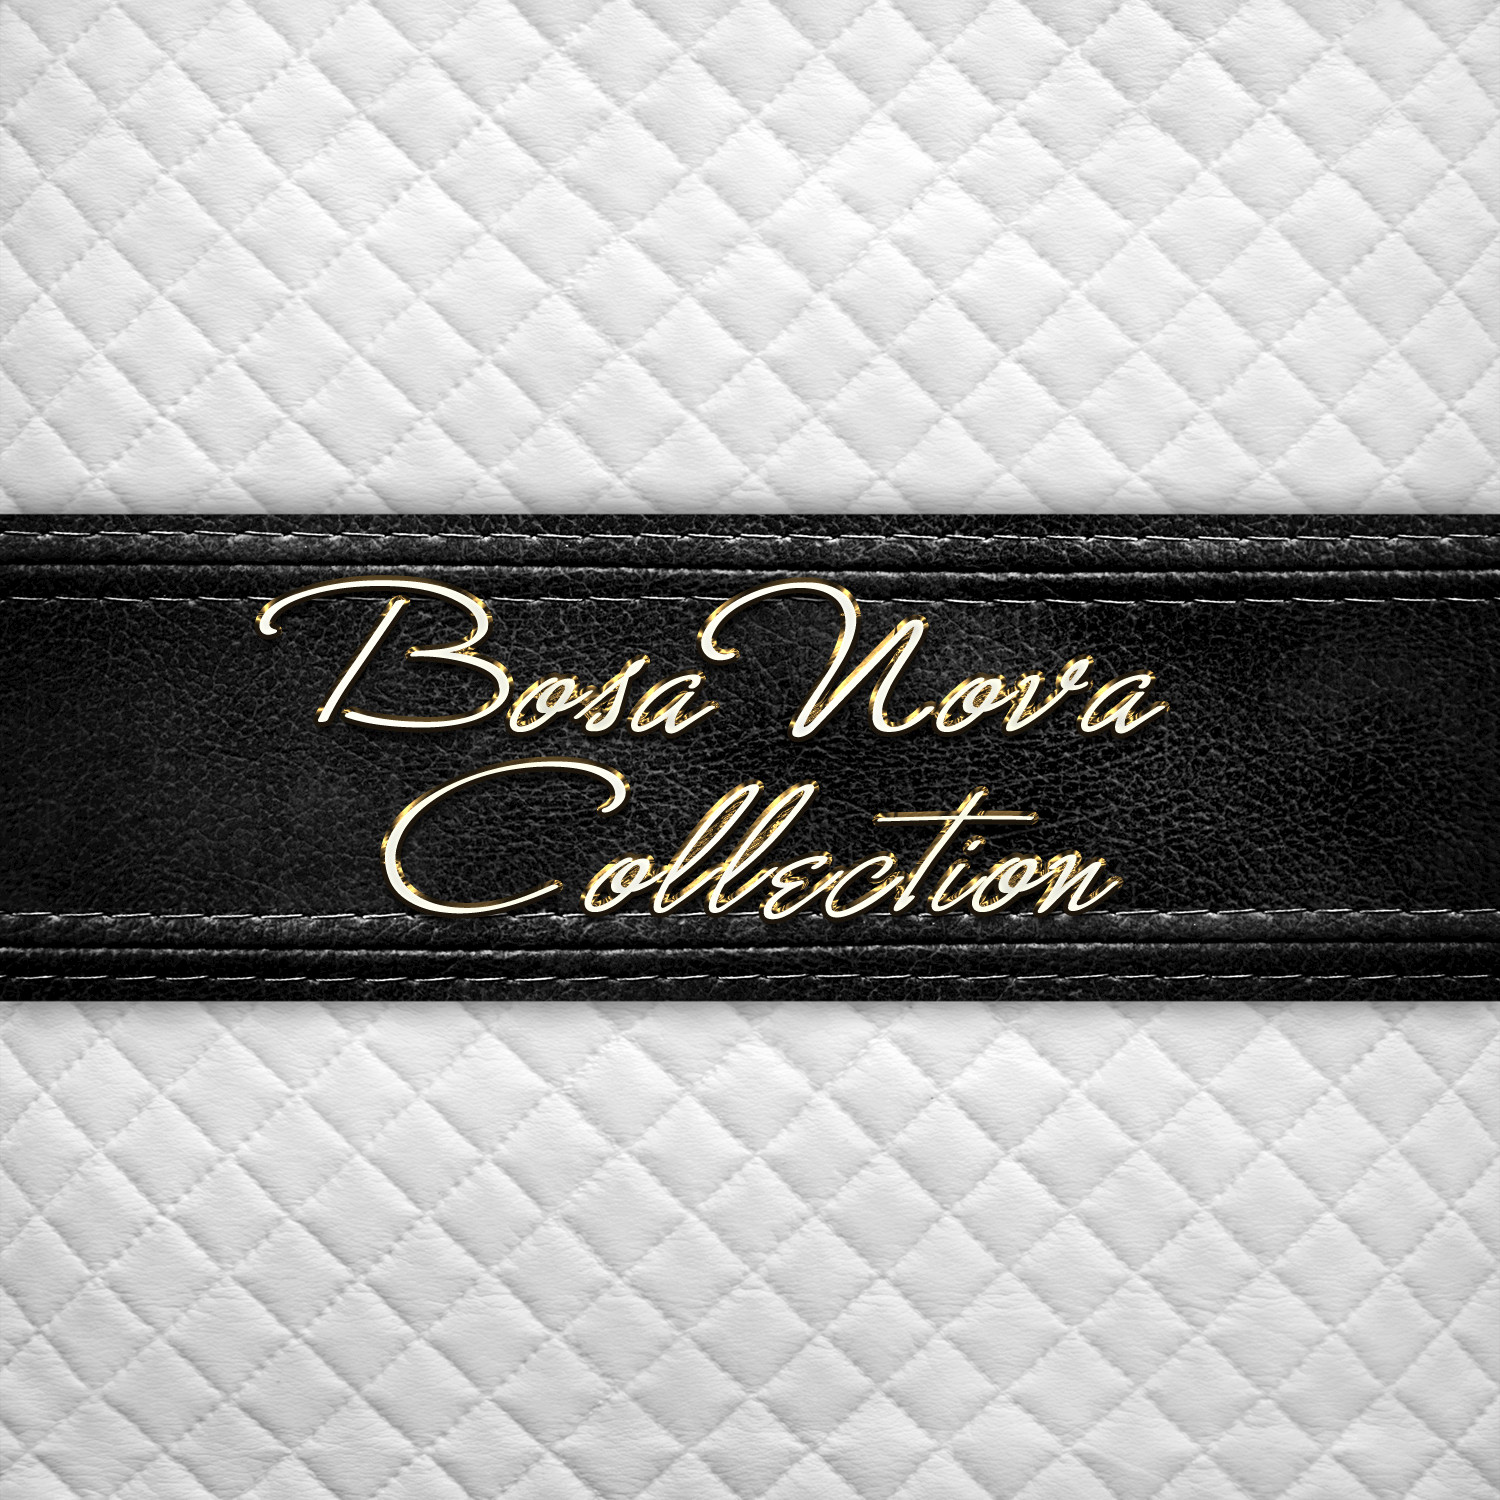 Bosa Nova Collection